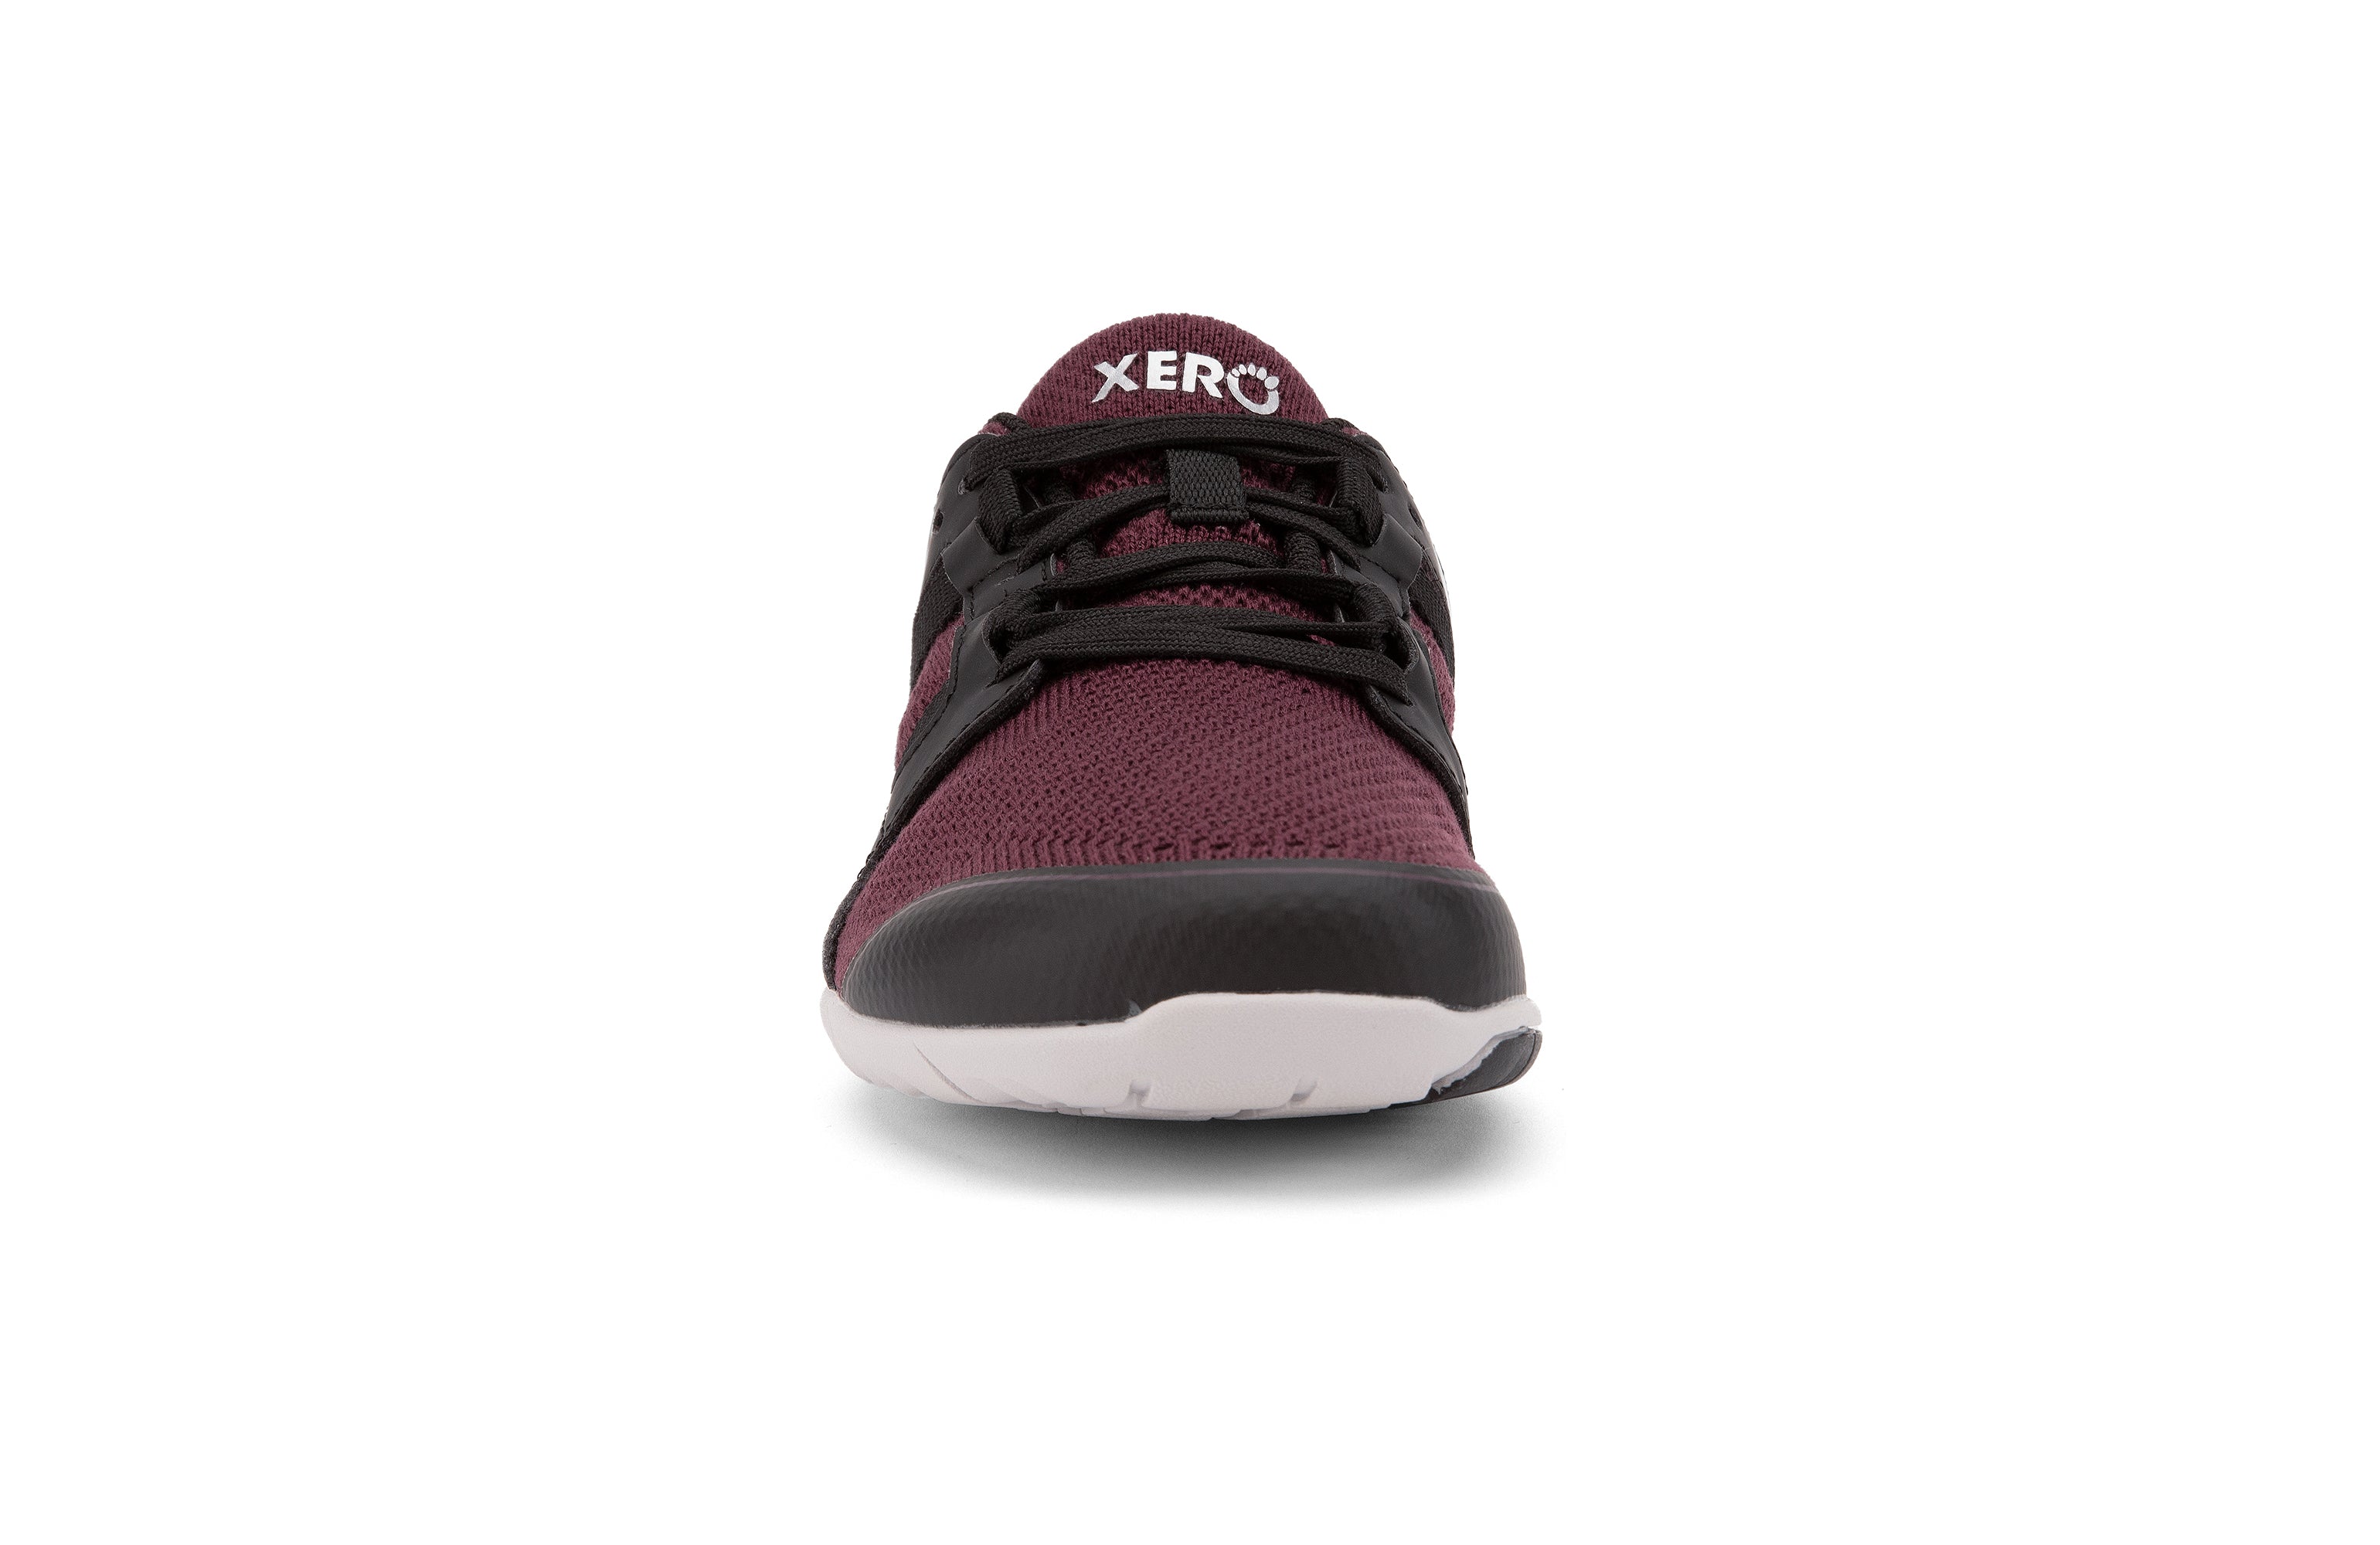 Xero Shoes Zelen Womens barfods træningssko til kvinder i farven fig / black, forfra